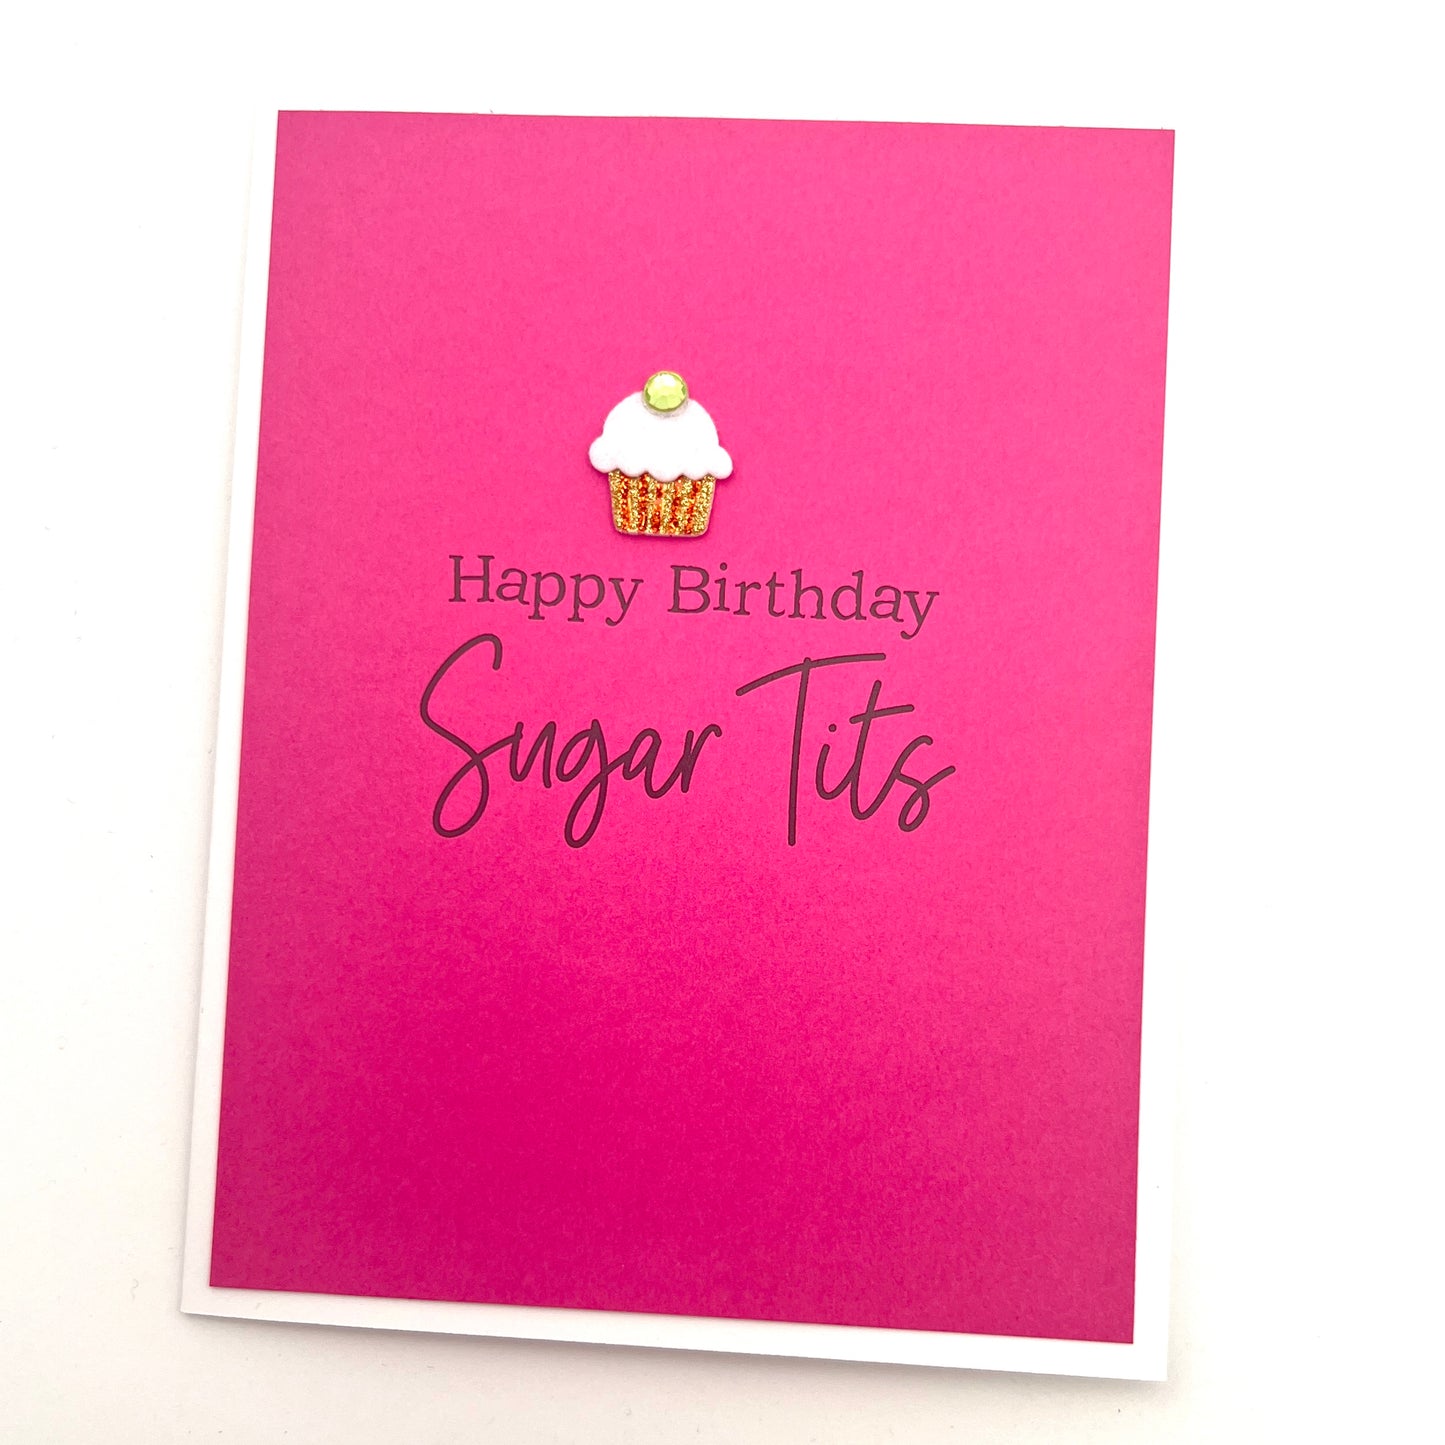 Sugar Tits card